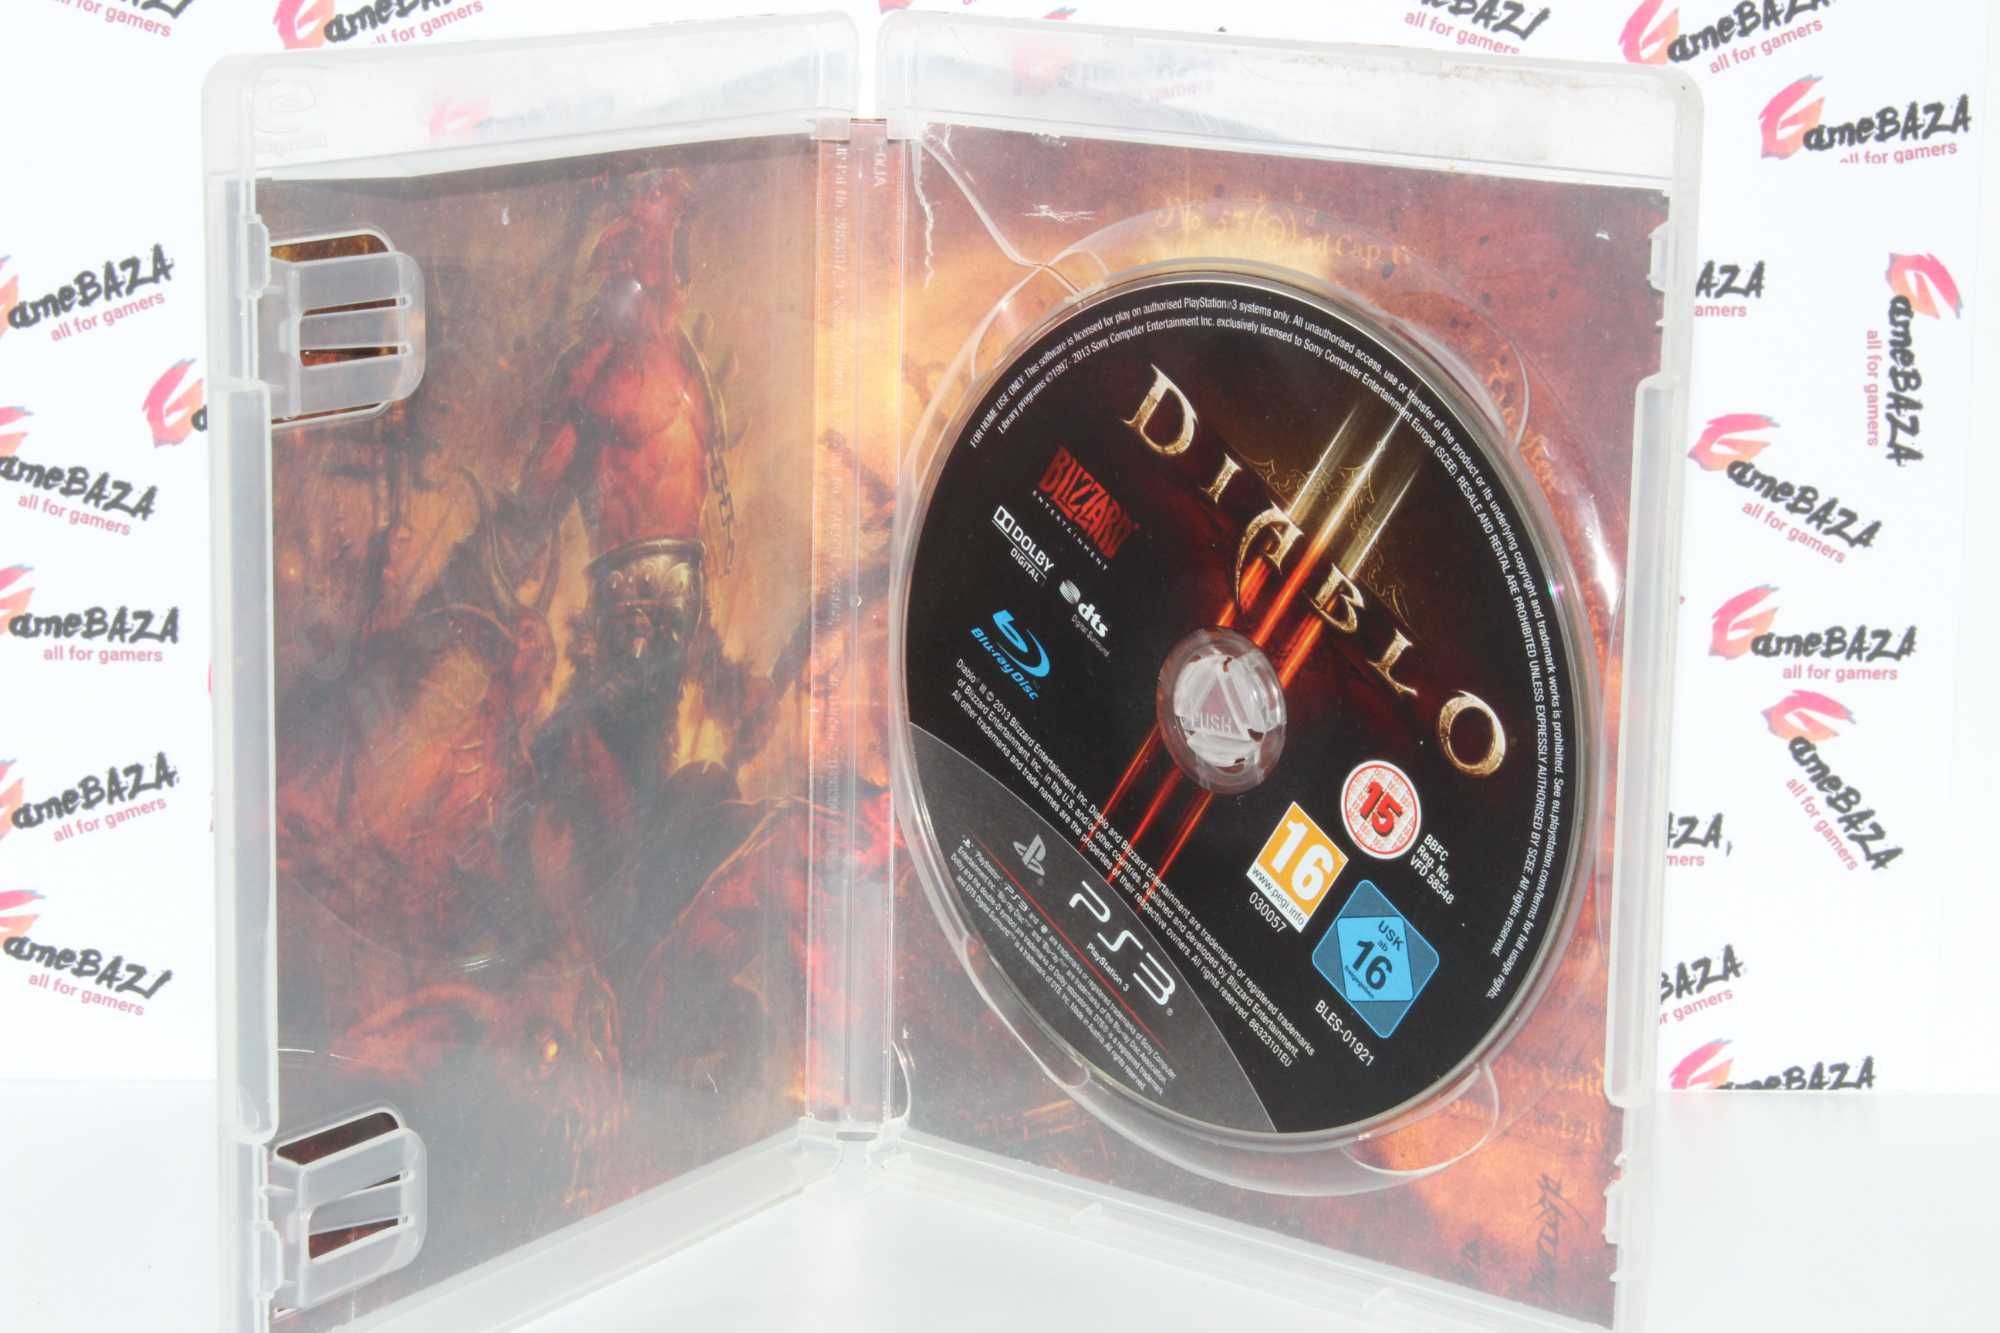 Diablo III PS3 GameBAZA